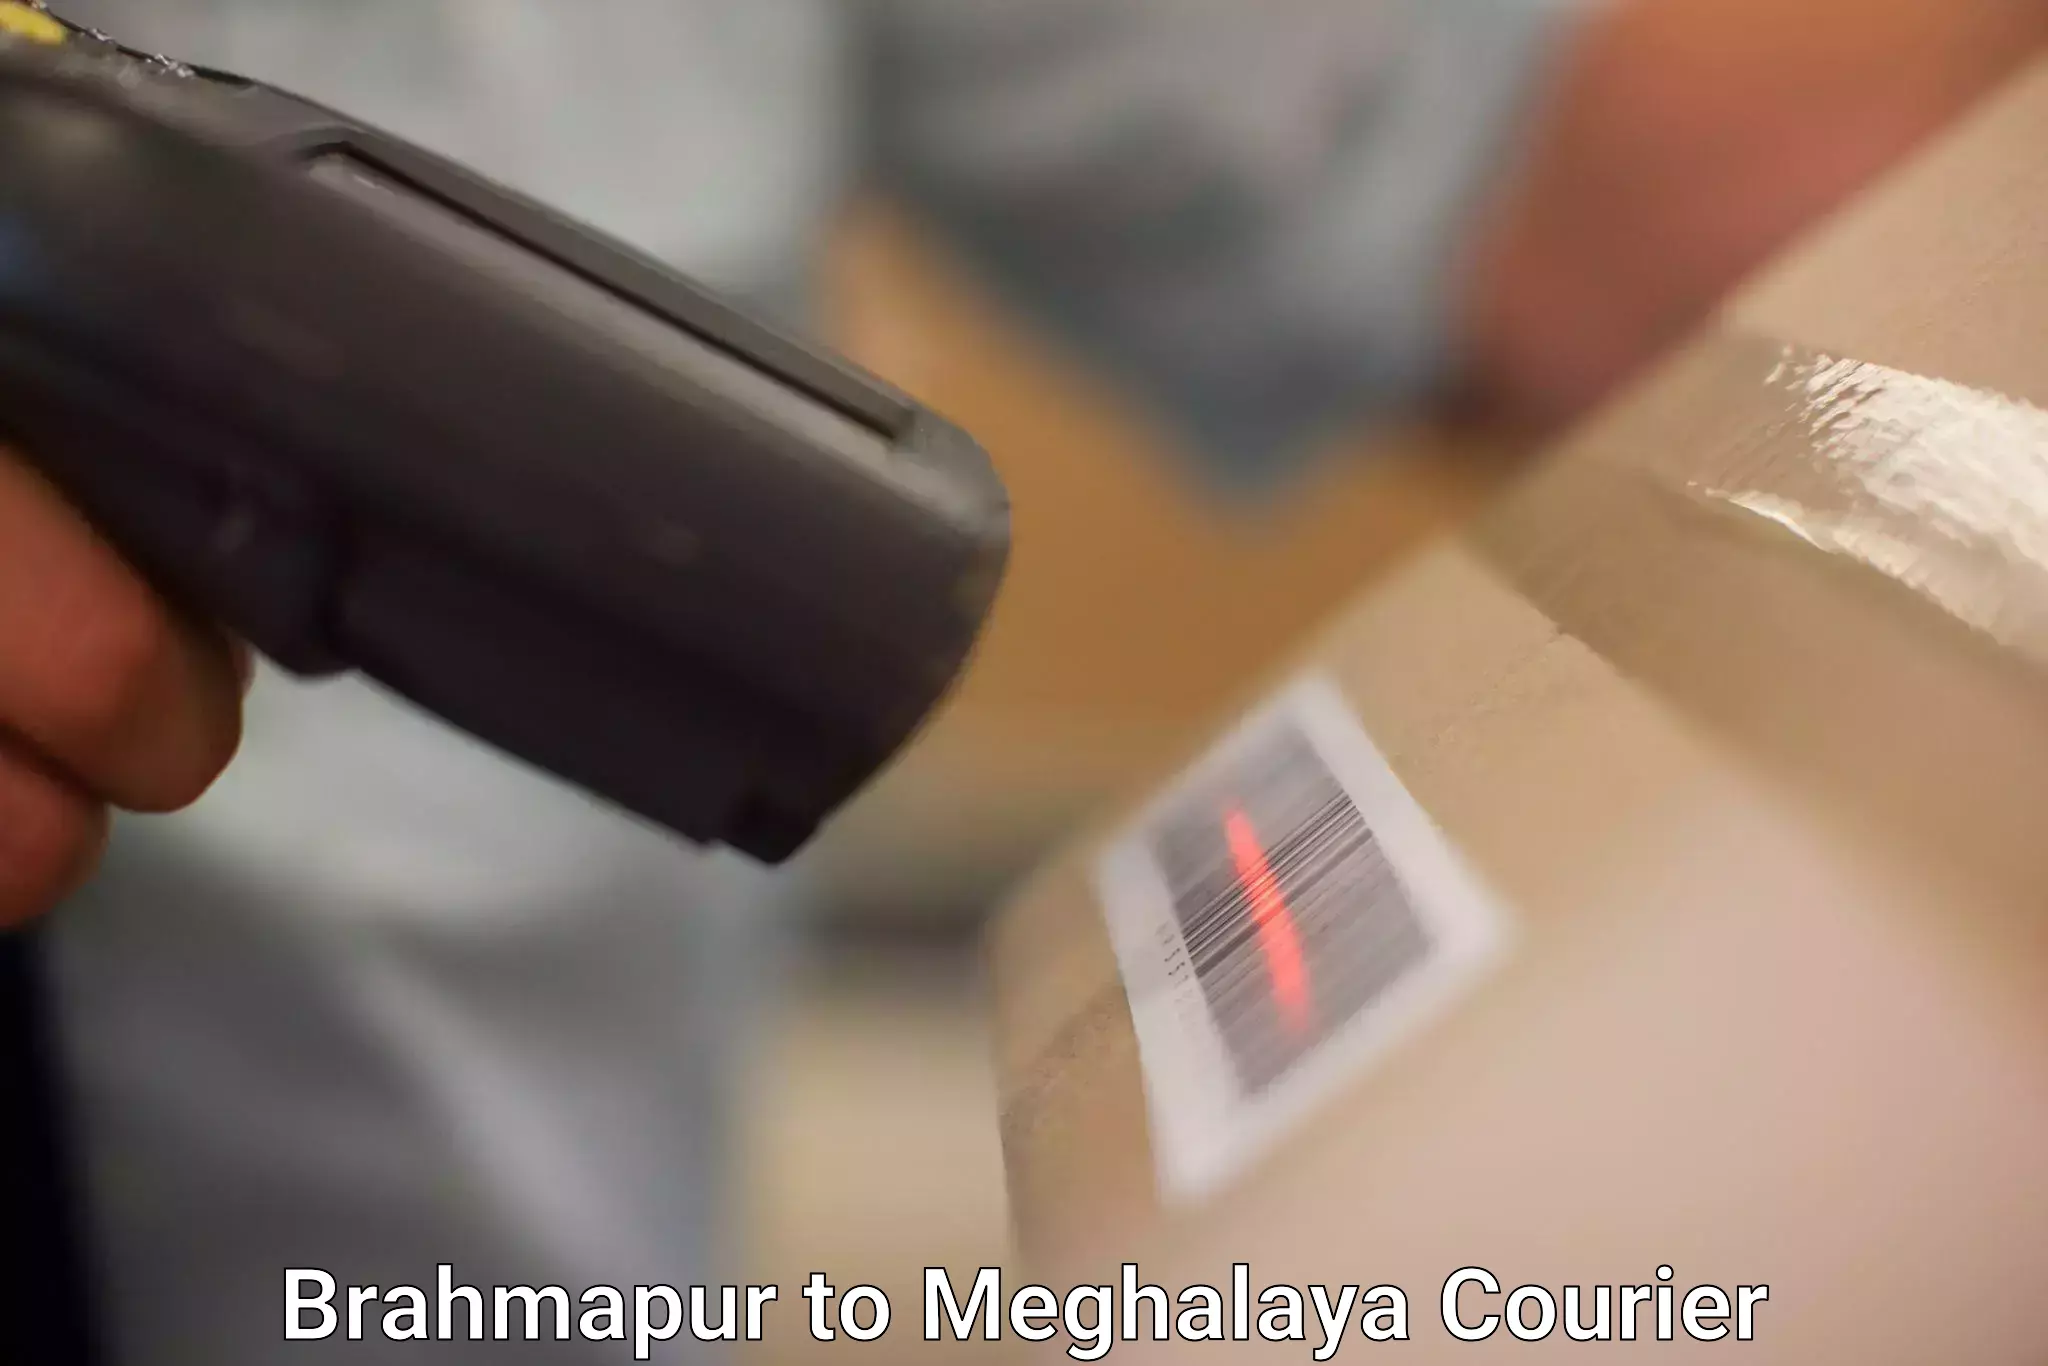 Courier service innovation Brahmapur to Jowai